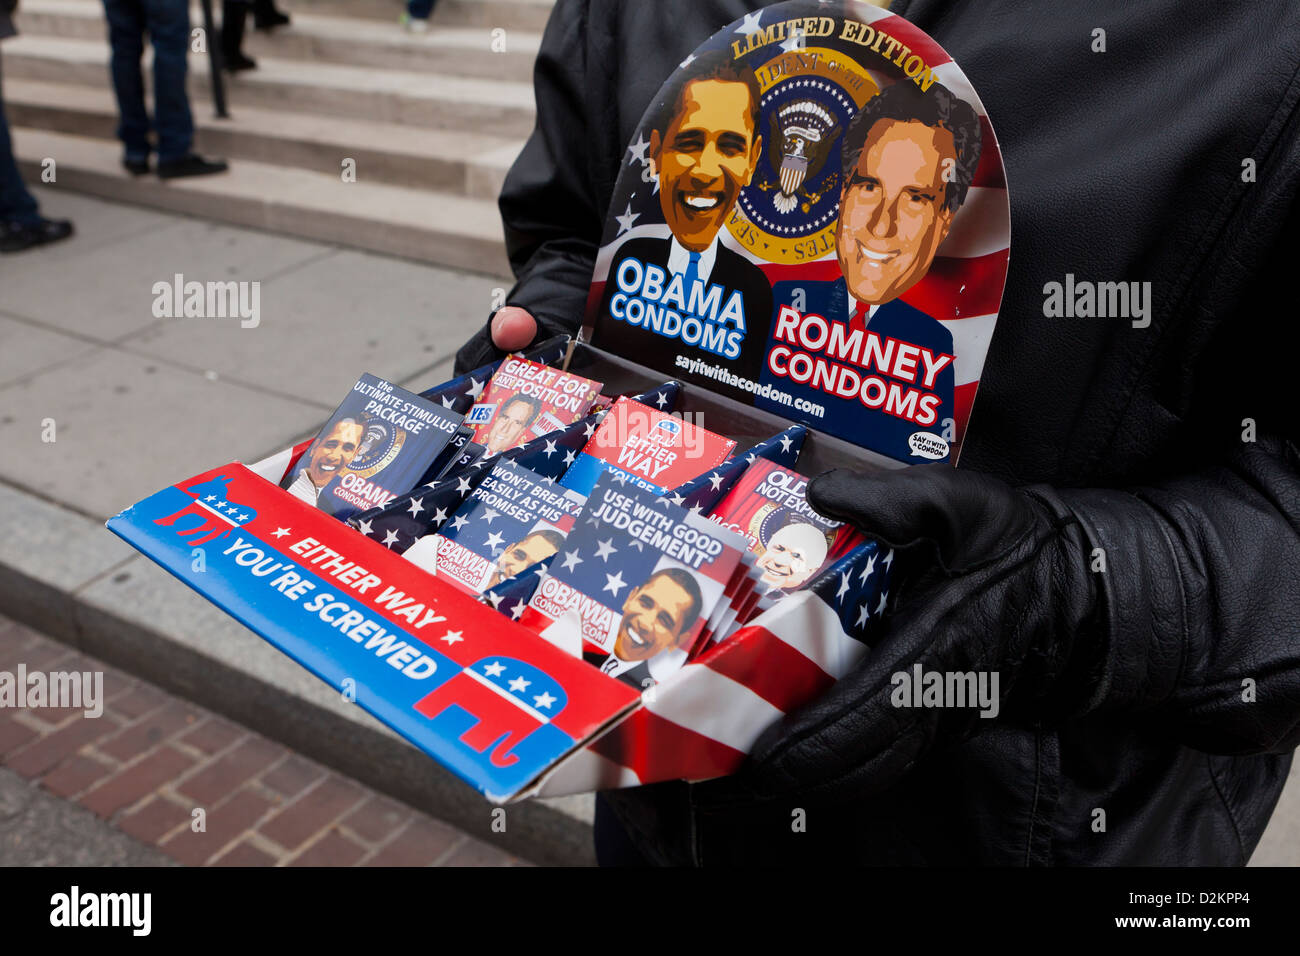 Man selling Obama Romney theme condoms Stock Photo